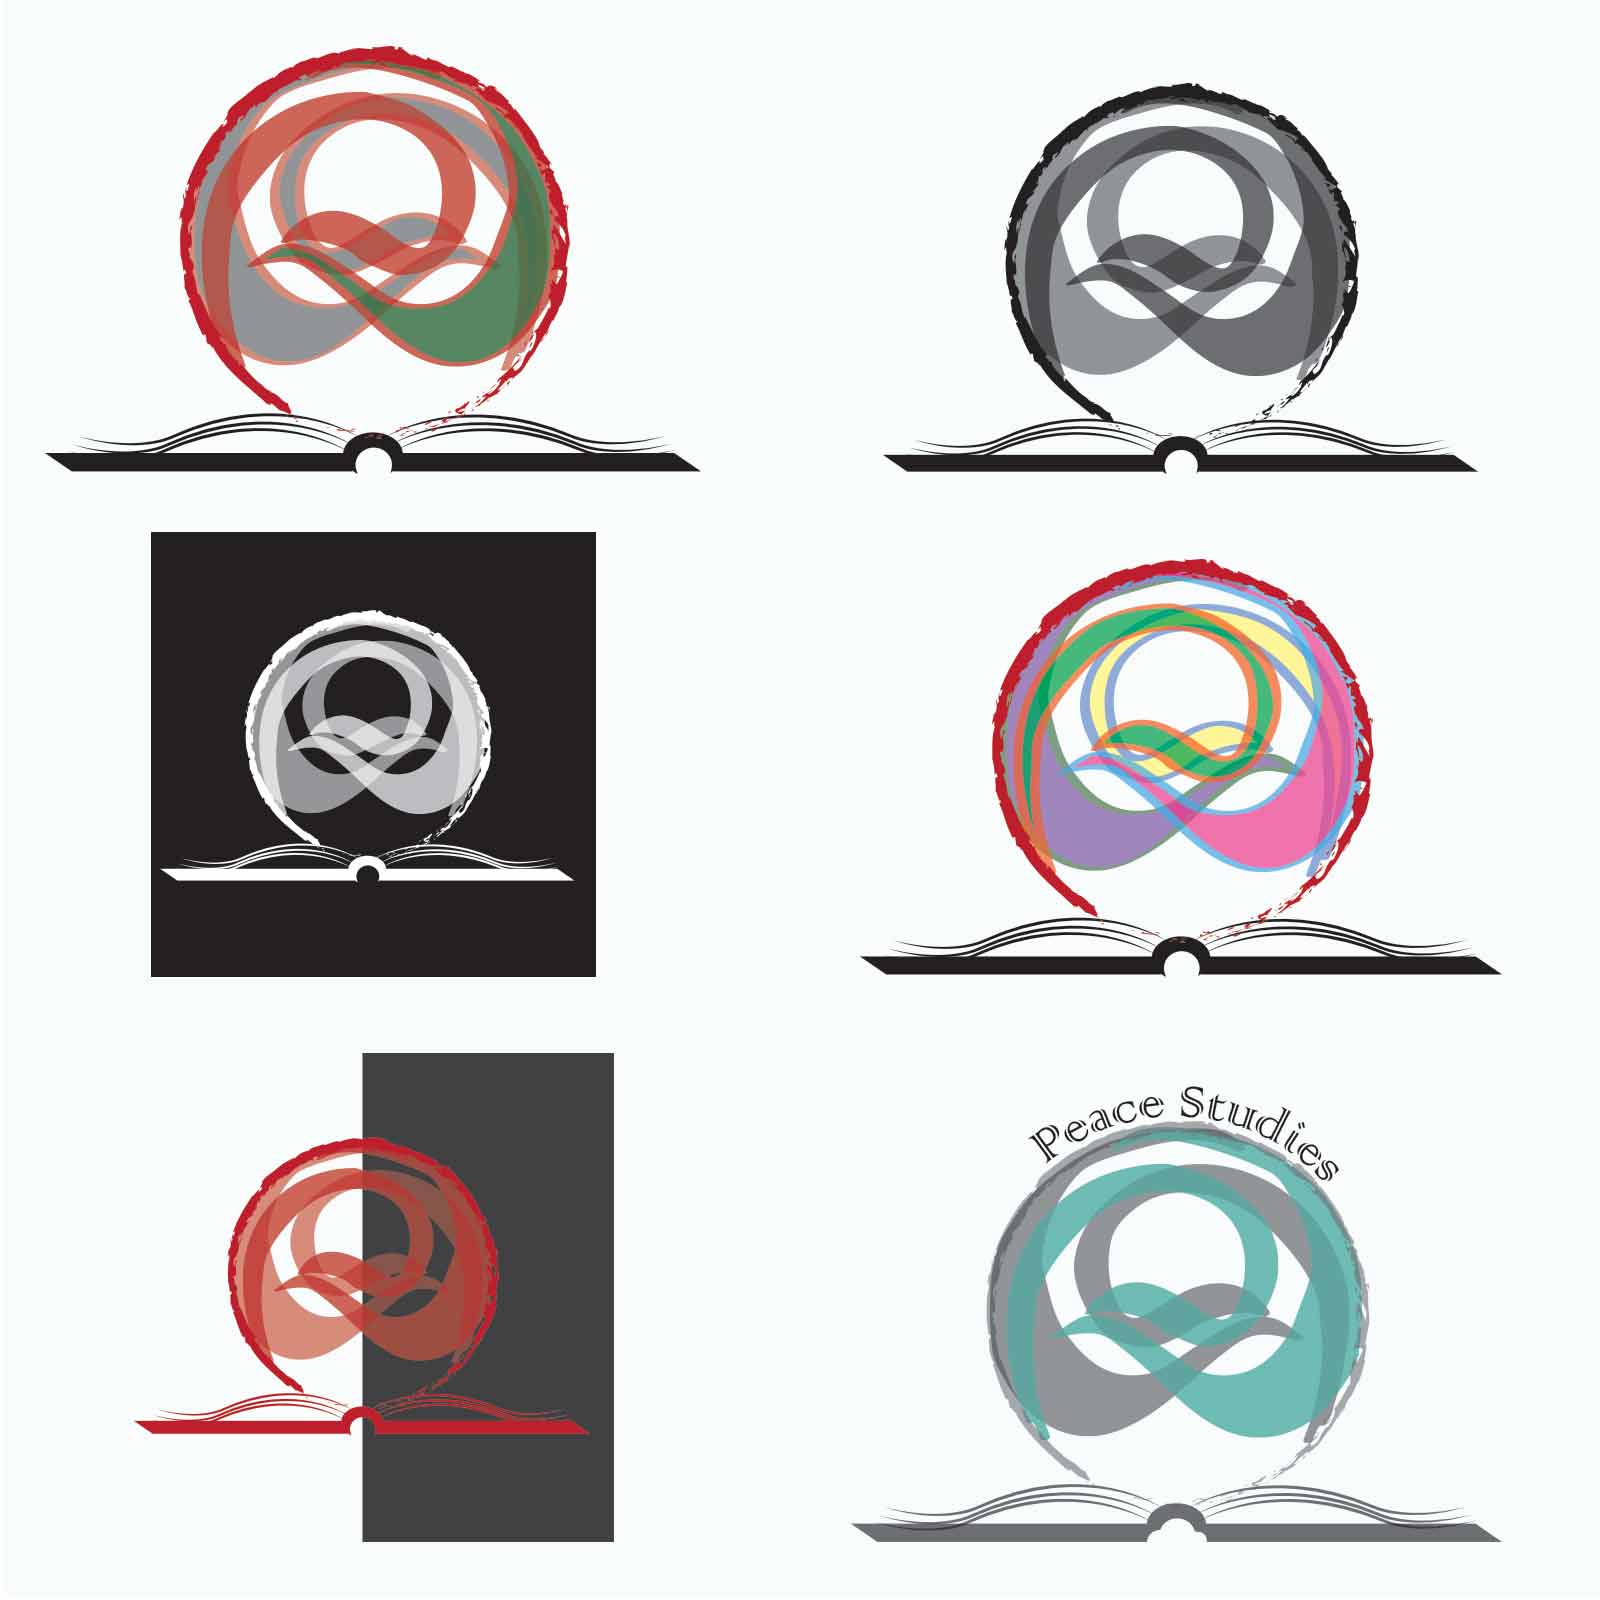 peace studies logo options